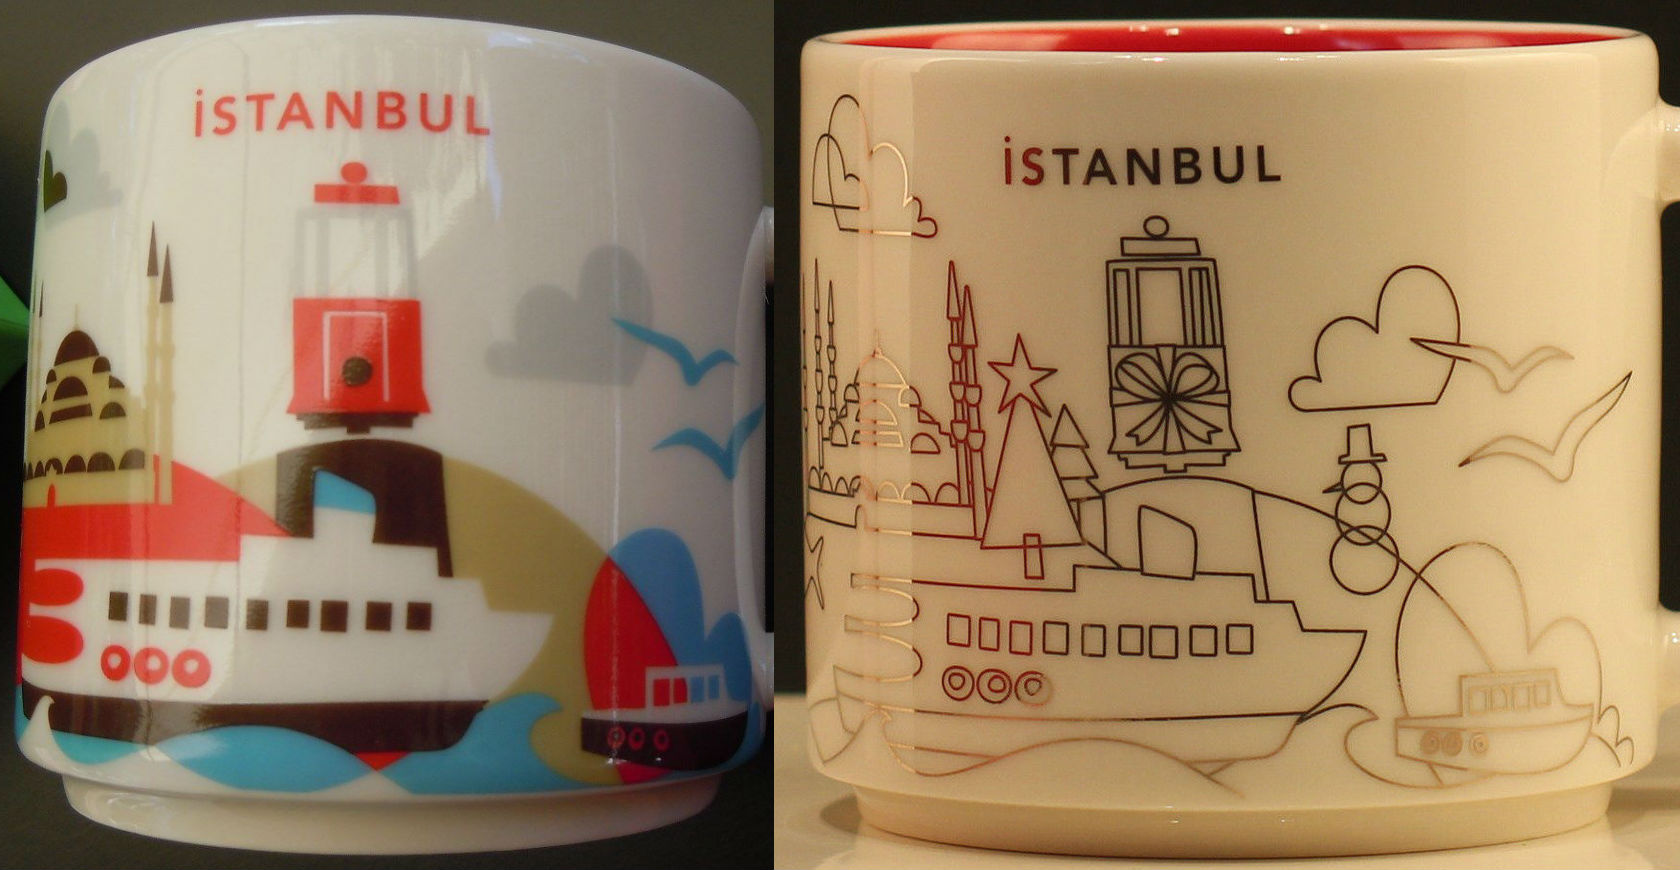 yah_istanbul_comparison